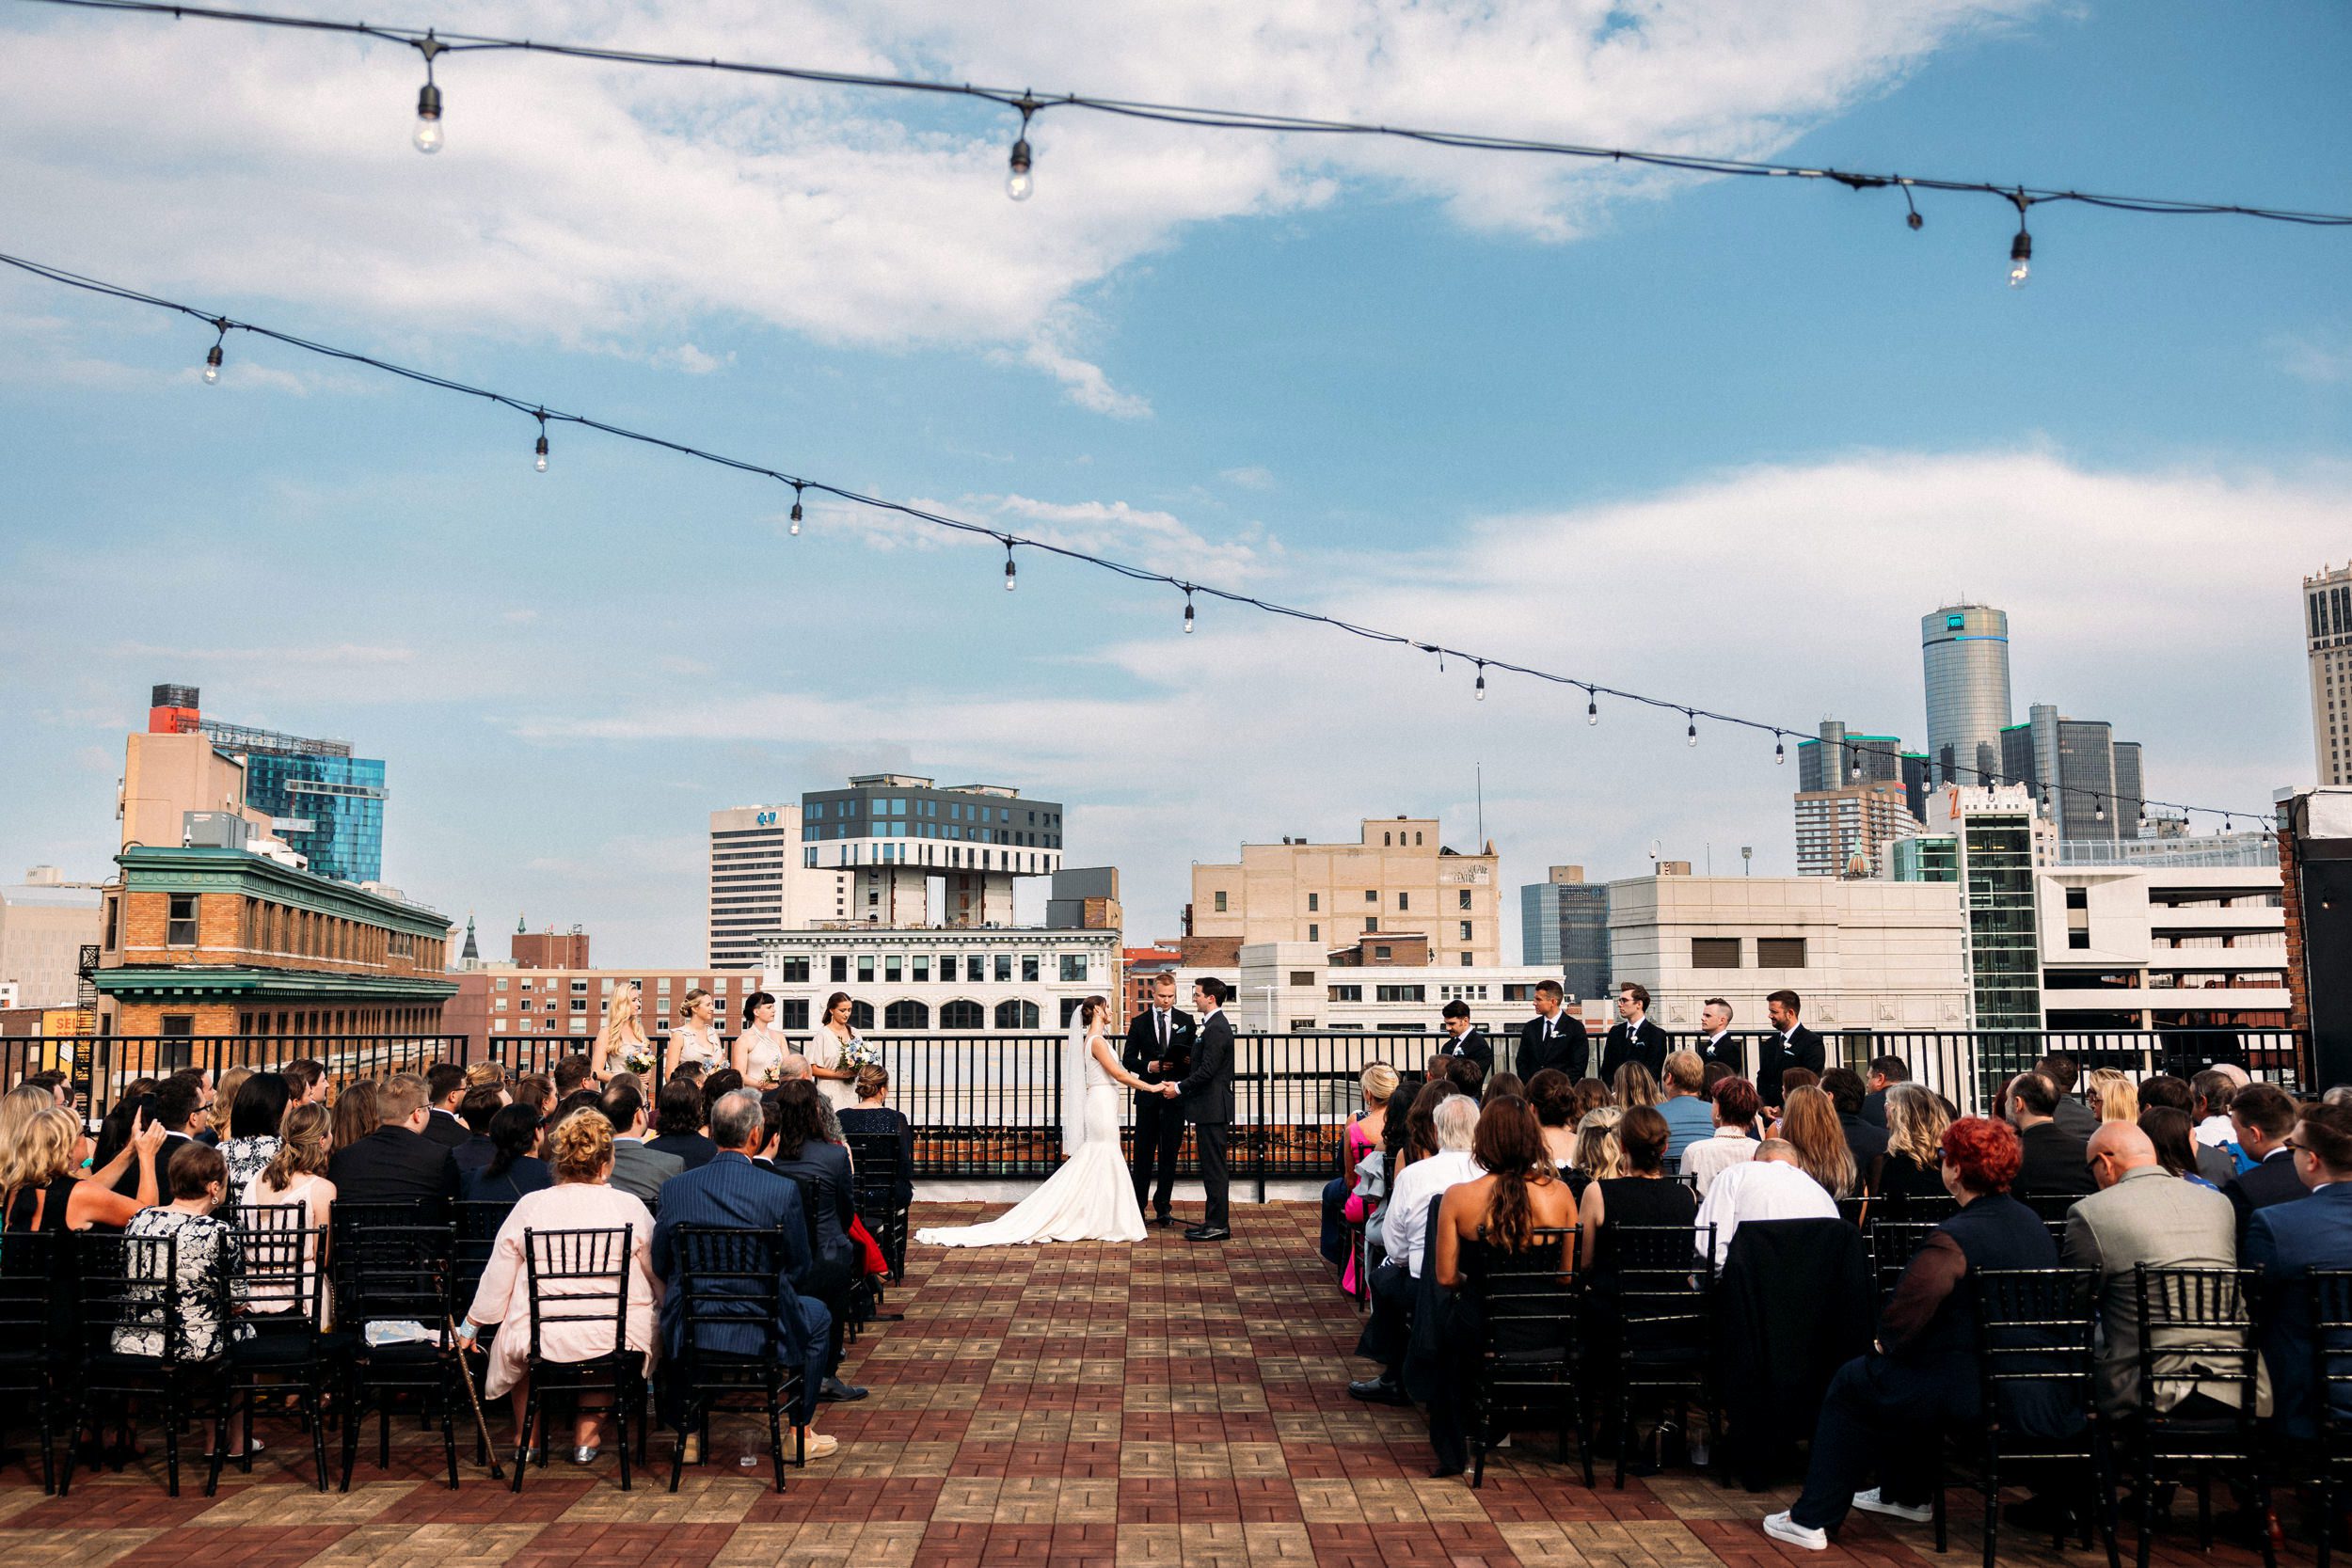 Detroit Opera House rooftop wedding ceremony